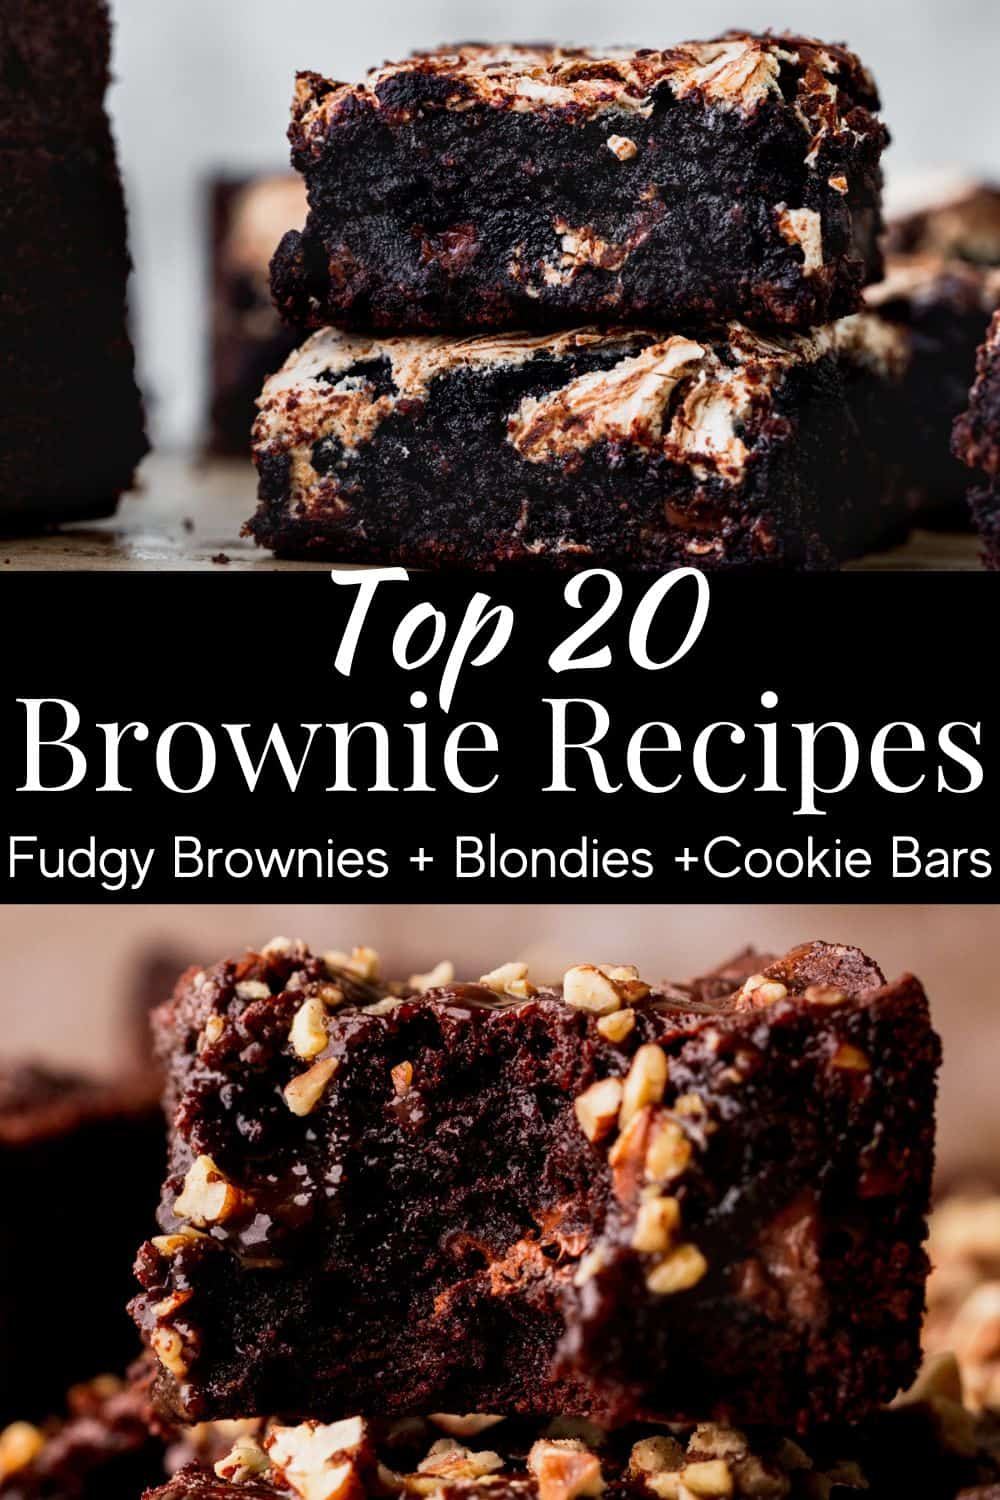 Top 20 Brownie Recipes - Stephanie's Sweet Treats